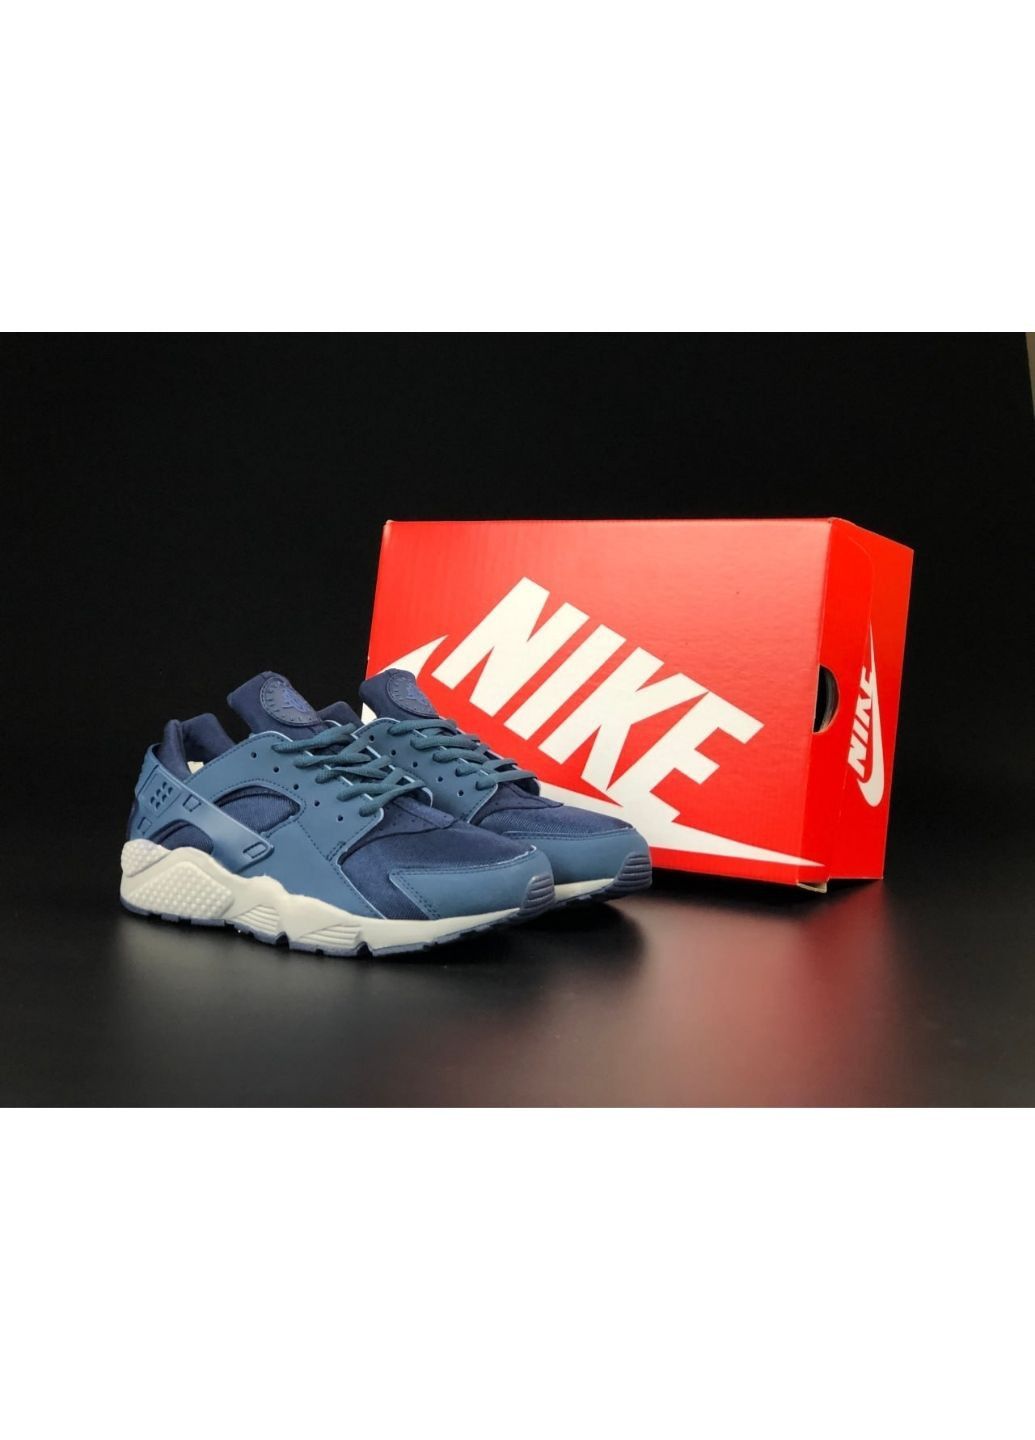 Синие демисезонные мужские кроссовки темно синие с бежевым "no name" Nike Huarache